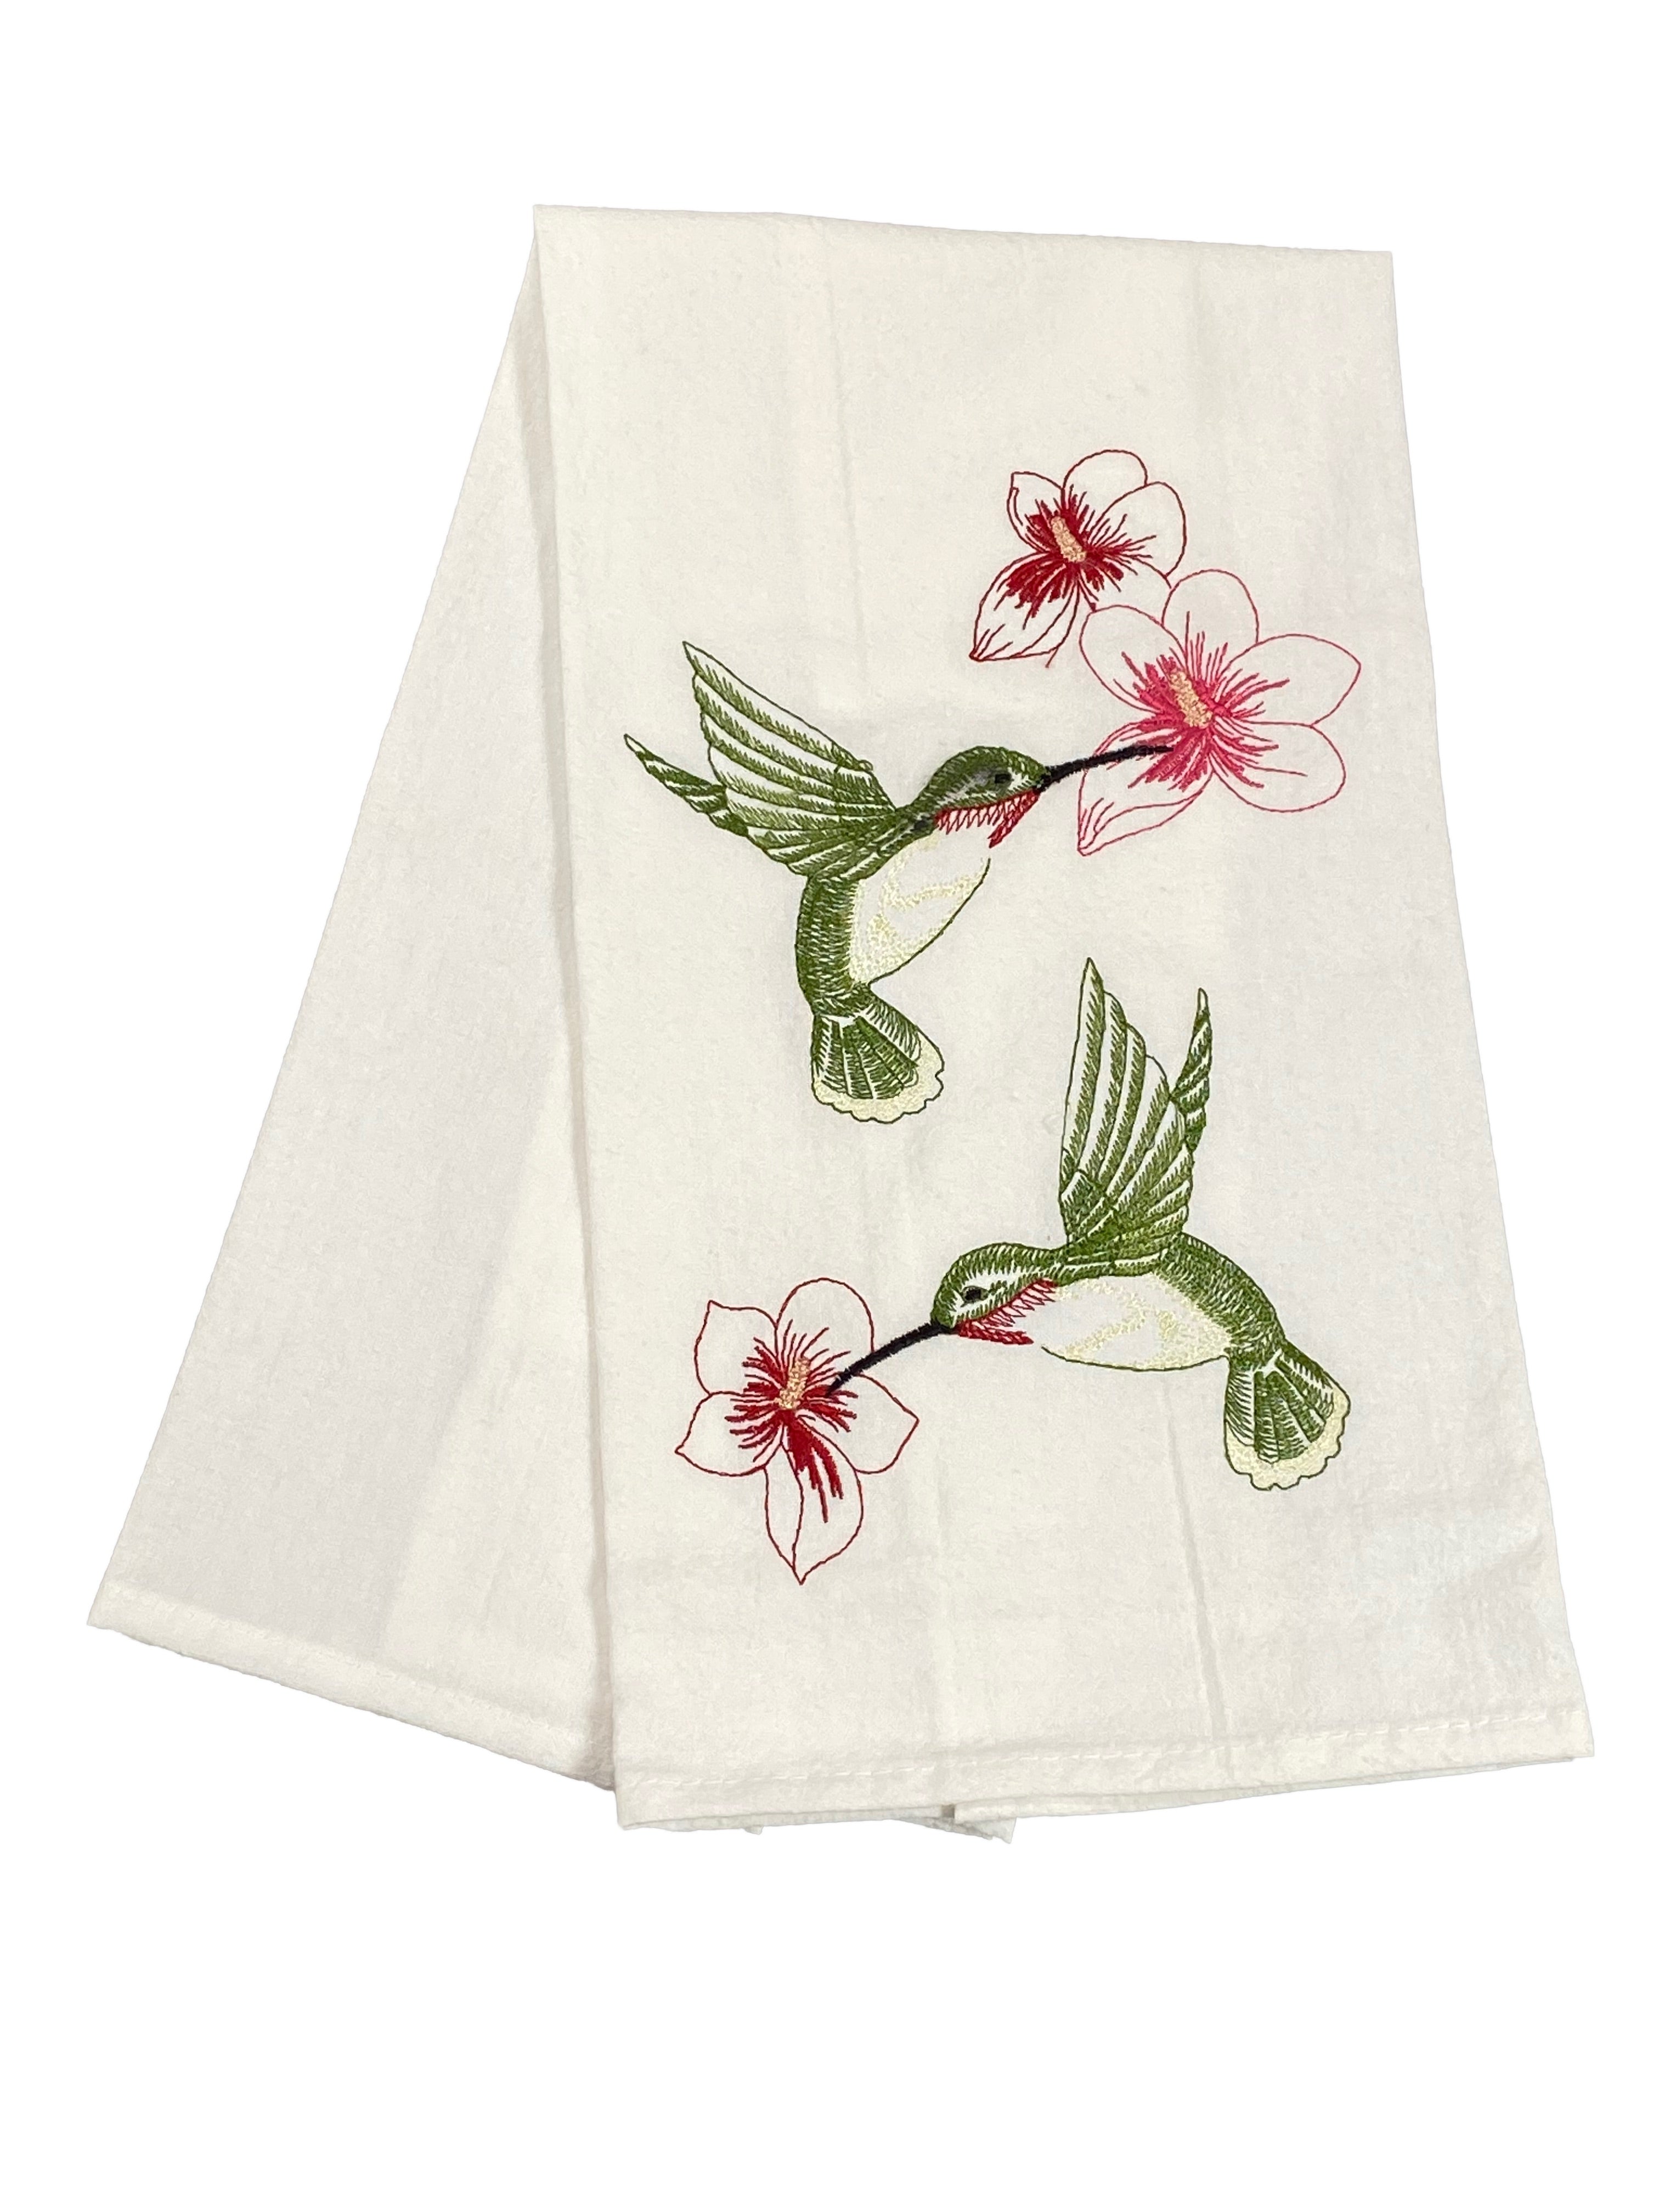 Hummingbirds With Flowers - Flour Sack Kitchen Towel    